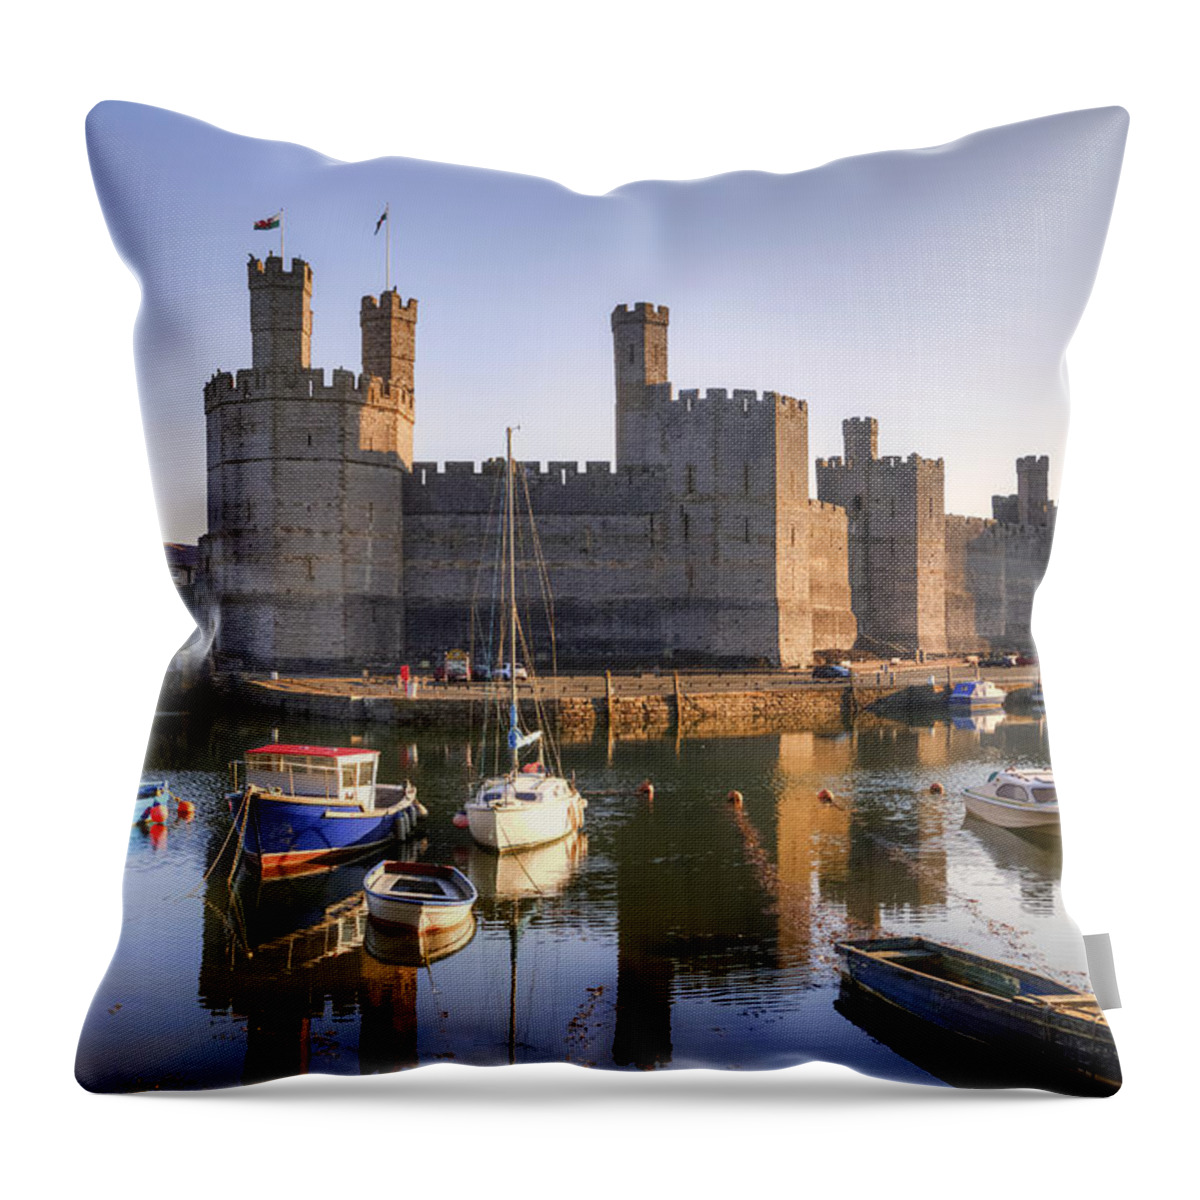 Caernarfon Castle Throw Pillow featuring the photograph Caernafon Castle - Wales by Joana Kruse